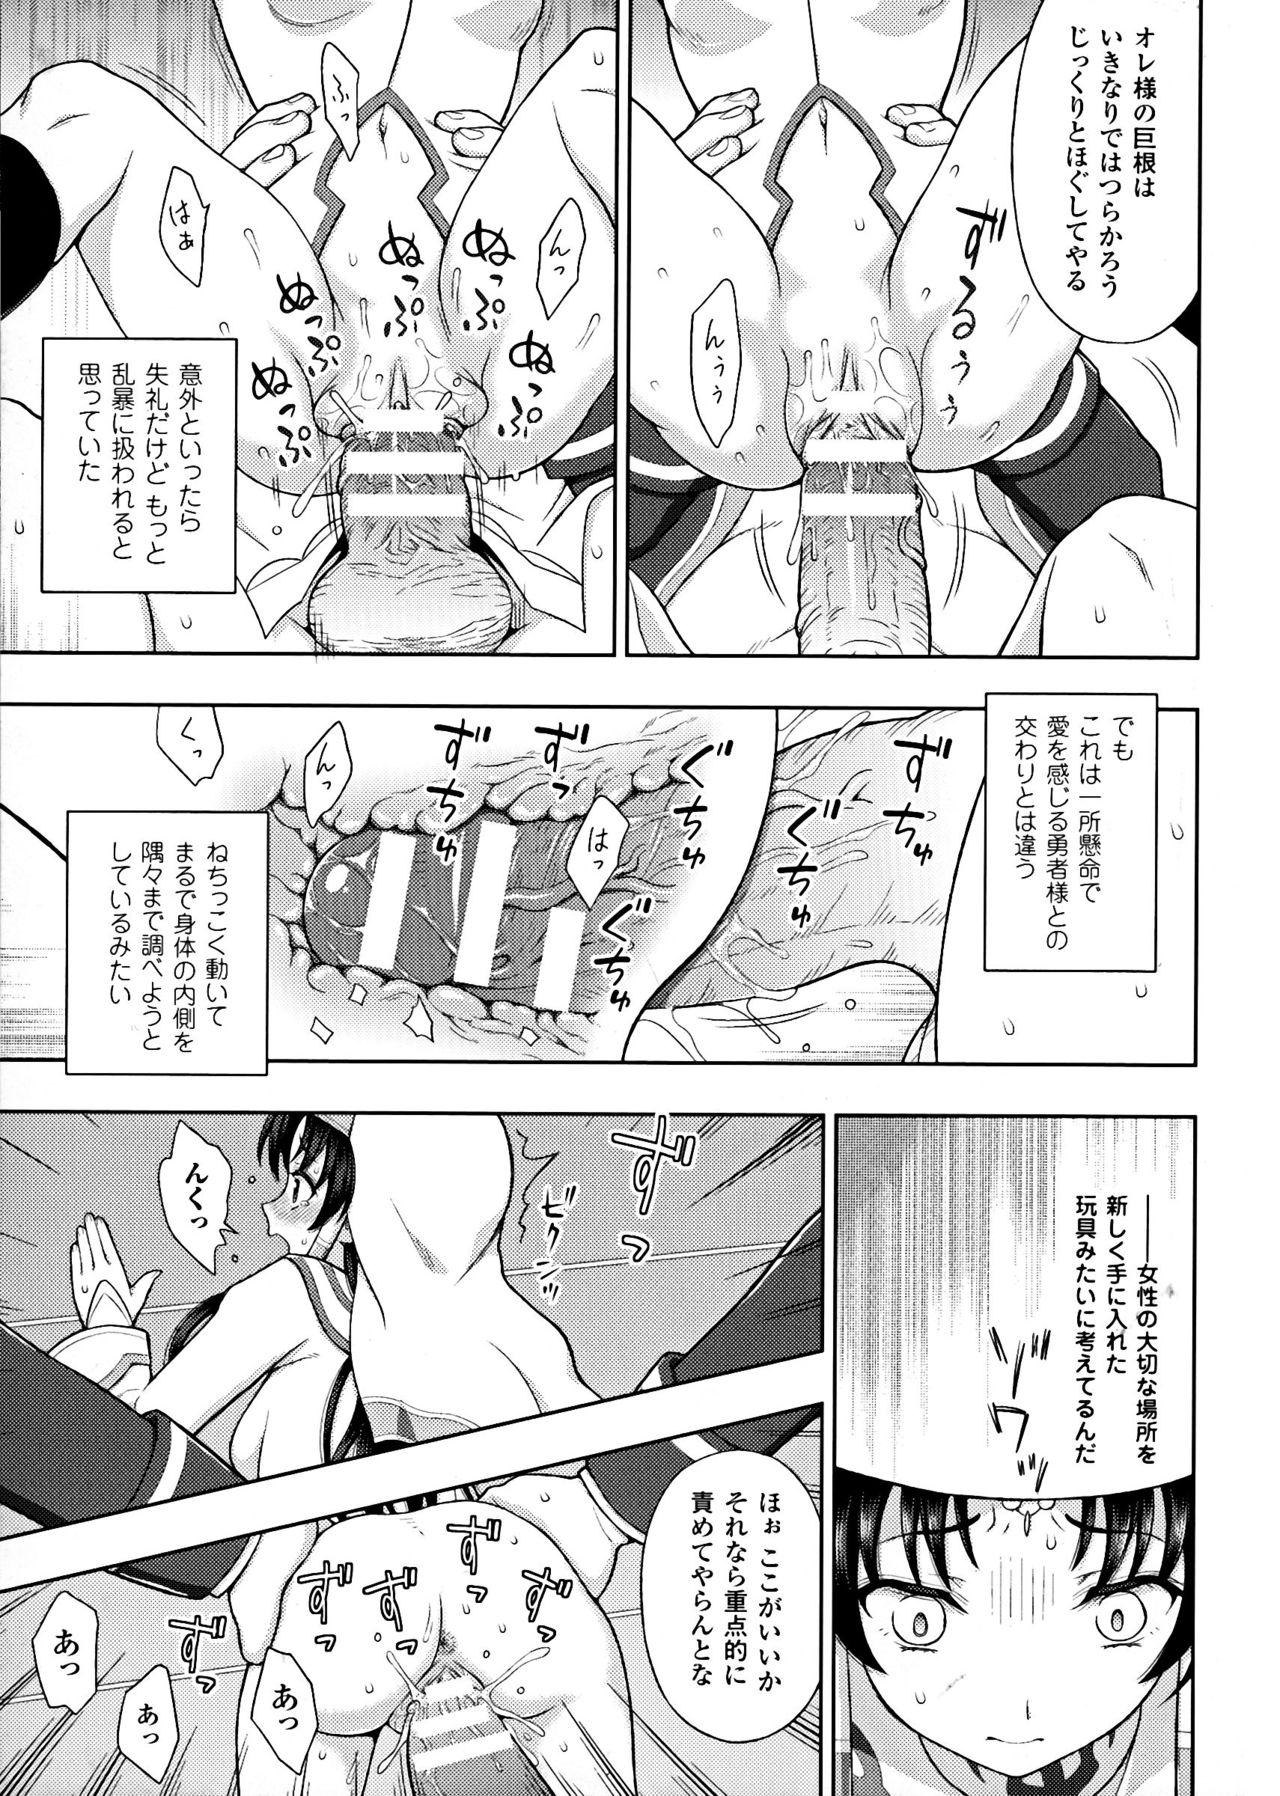 Seigi no Heroine Kangoku File DX vol. 6 81